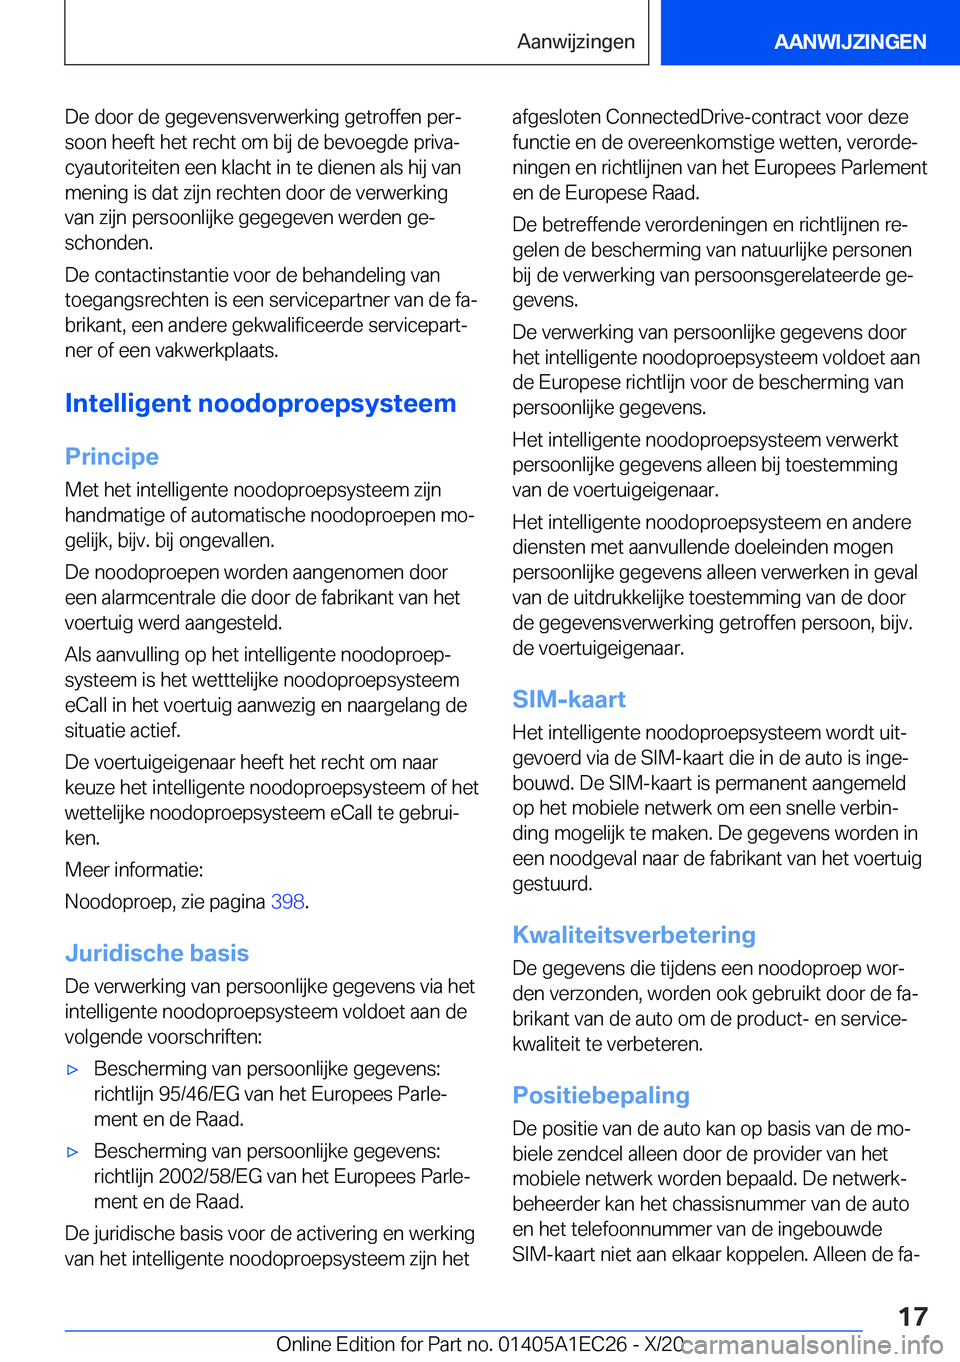 BMW 8 SERIES GRAN COUPE 2021  Instructieboekjes (in Dutch) �D�e��d�o�o�r��d�e��g�e�g�e�v�e�n�s�v�e�r�w�e�r�k�i�n�g��g�e�t�r�o�f�f�e�n��p�e�rj
�s�o�o�n��h�e�e�f�t��h�e�t��r�e�c�h�t��o�m��b�i�j��d�e��b�e�v�o�e�g�d�e��p�r�i�v�aj �c�y�a�u�t�o�r�i�t